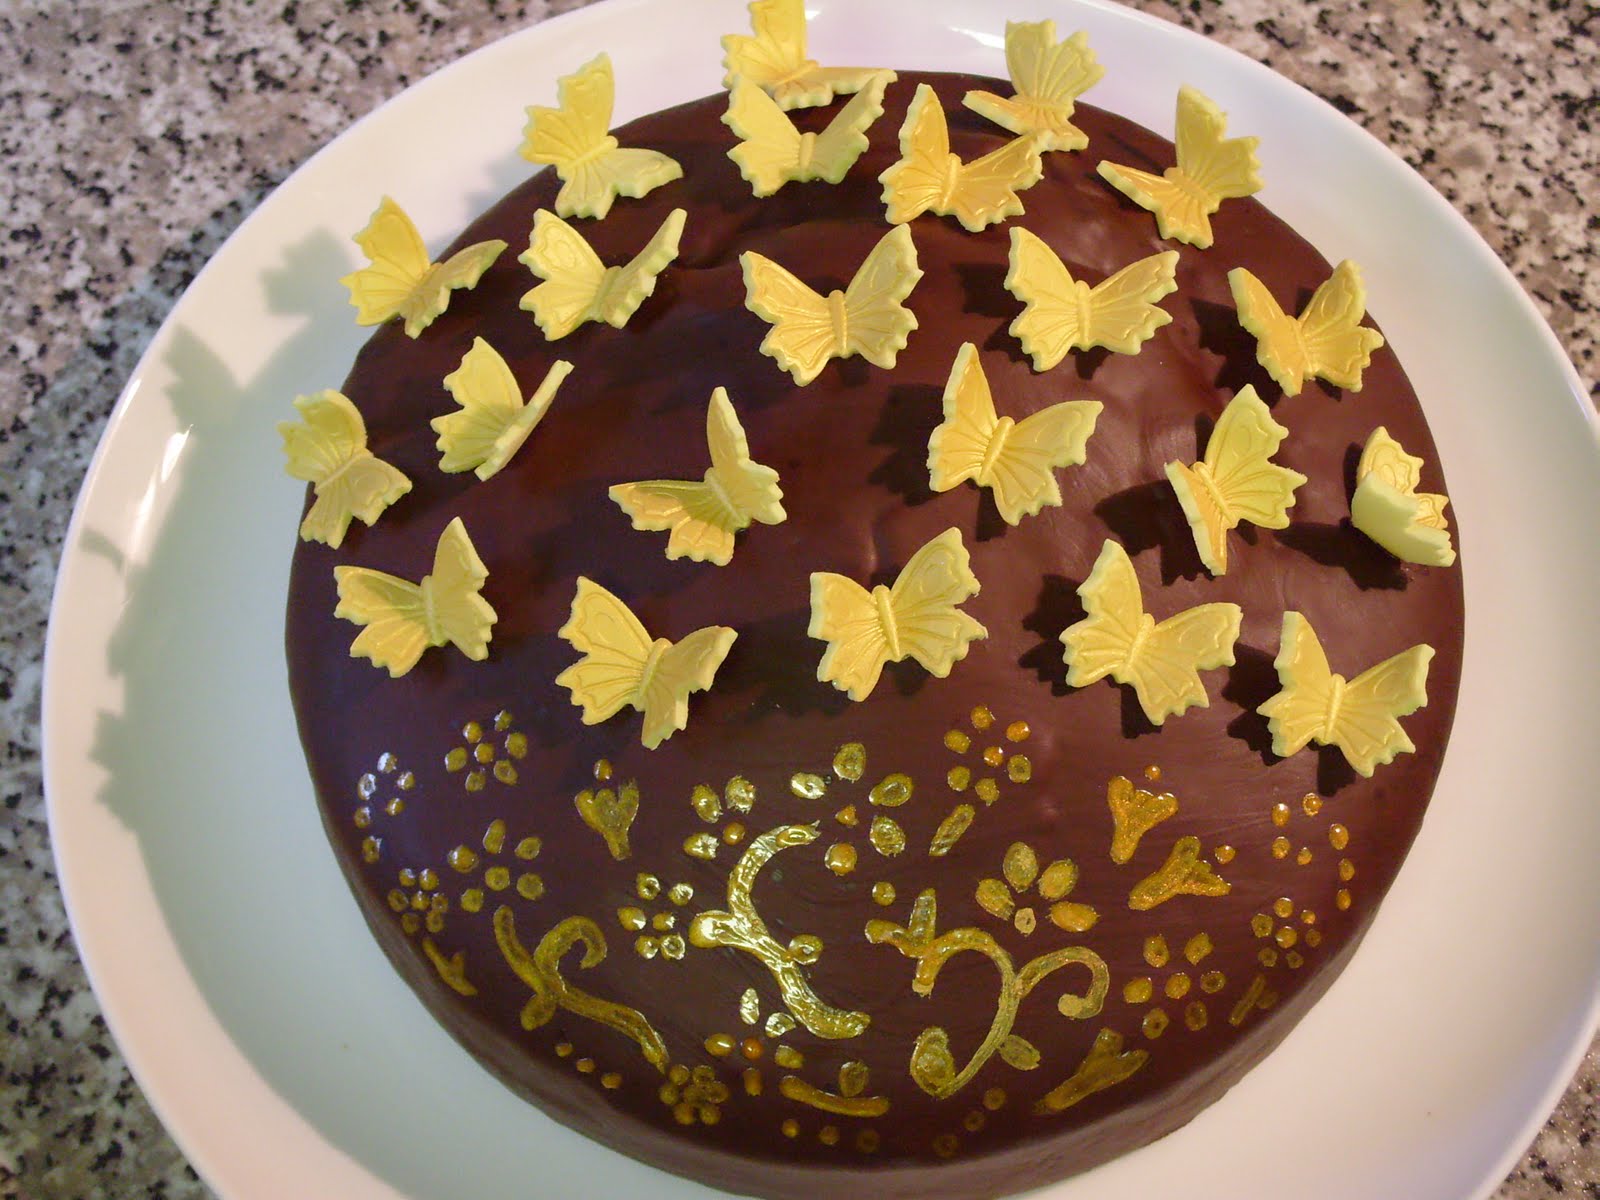 Chocolate+madeira+cake+recipe